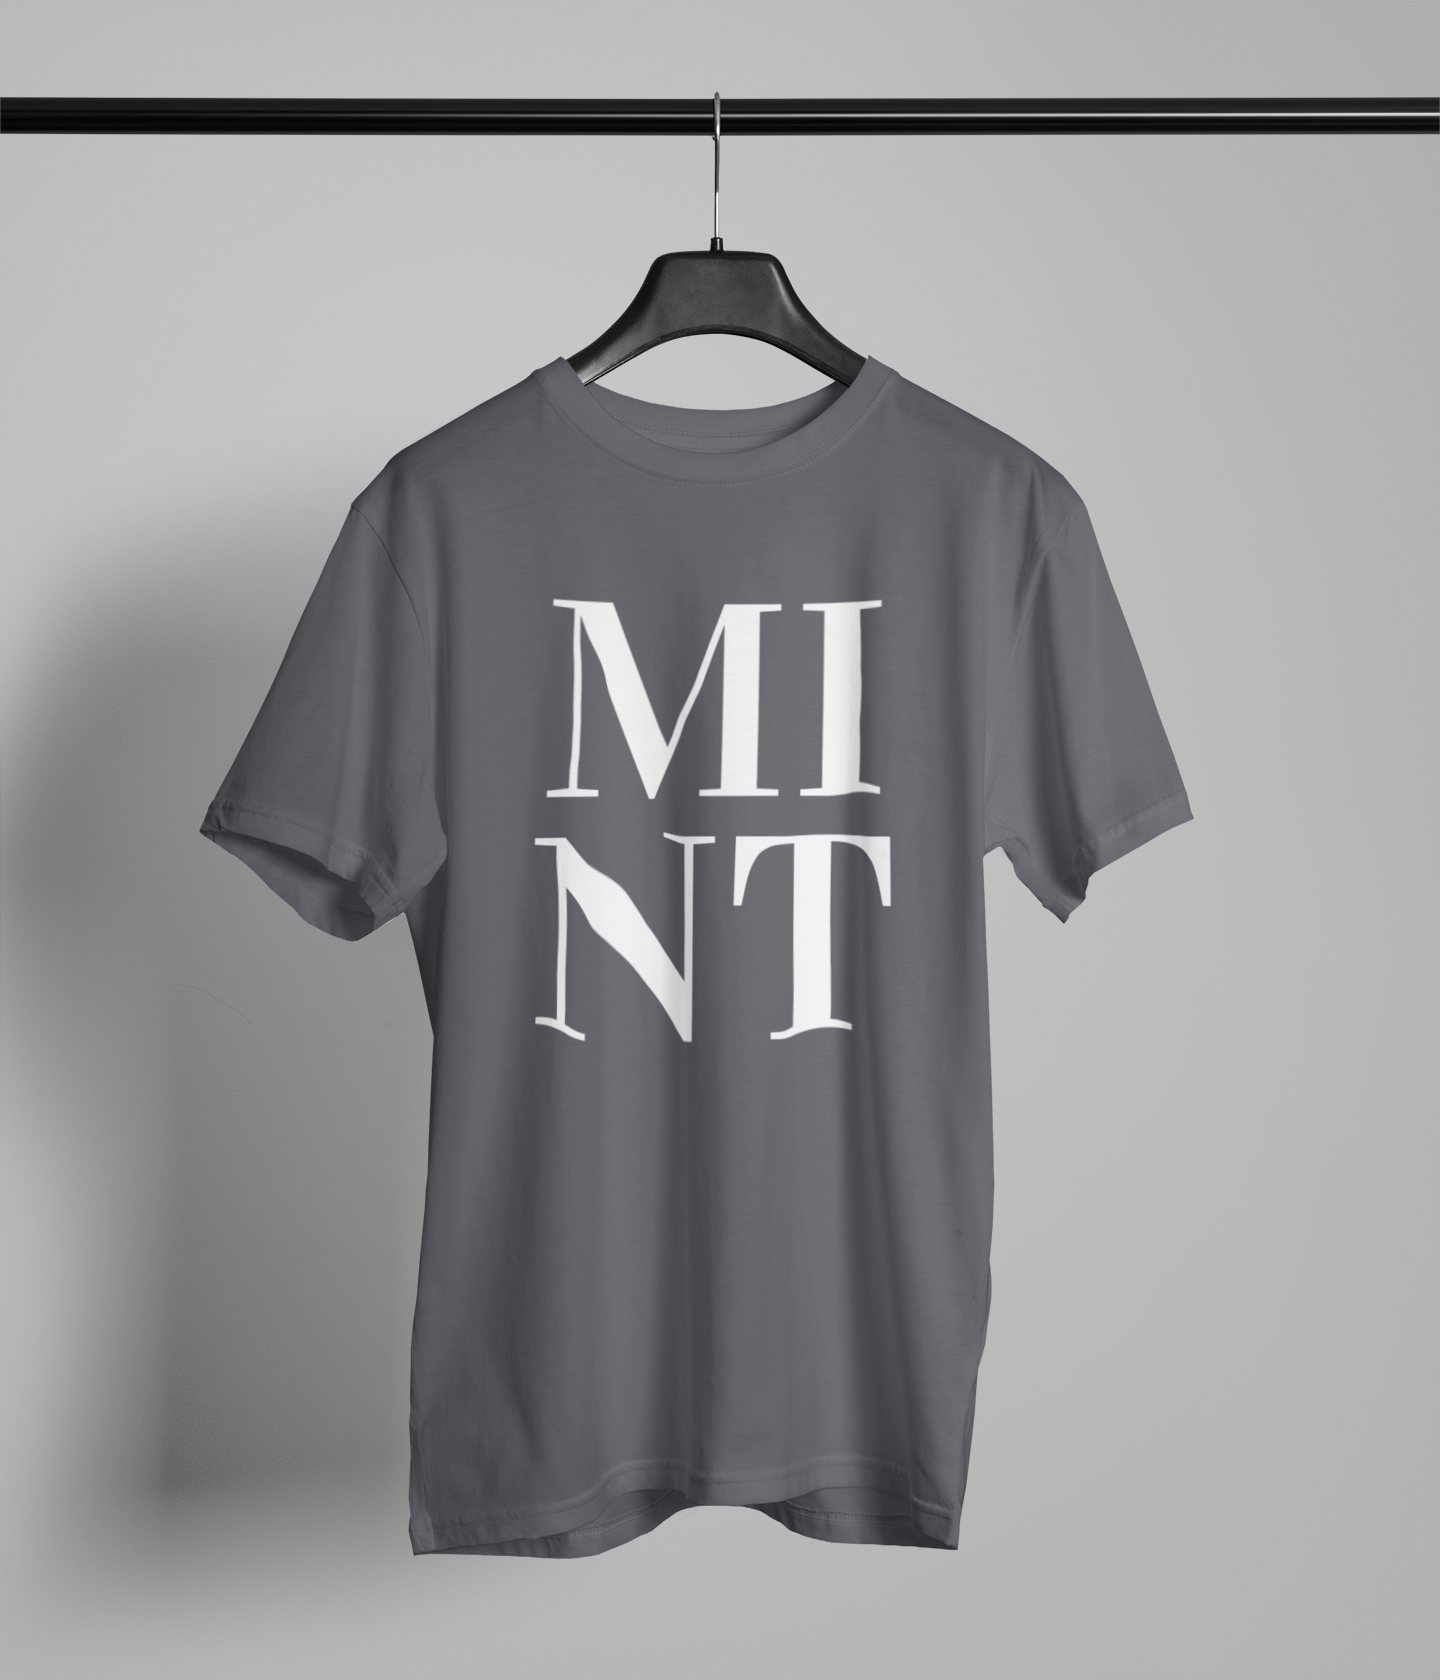 MINT Northern Slang T-Shirt Unisex – nowt2wear